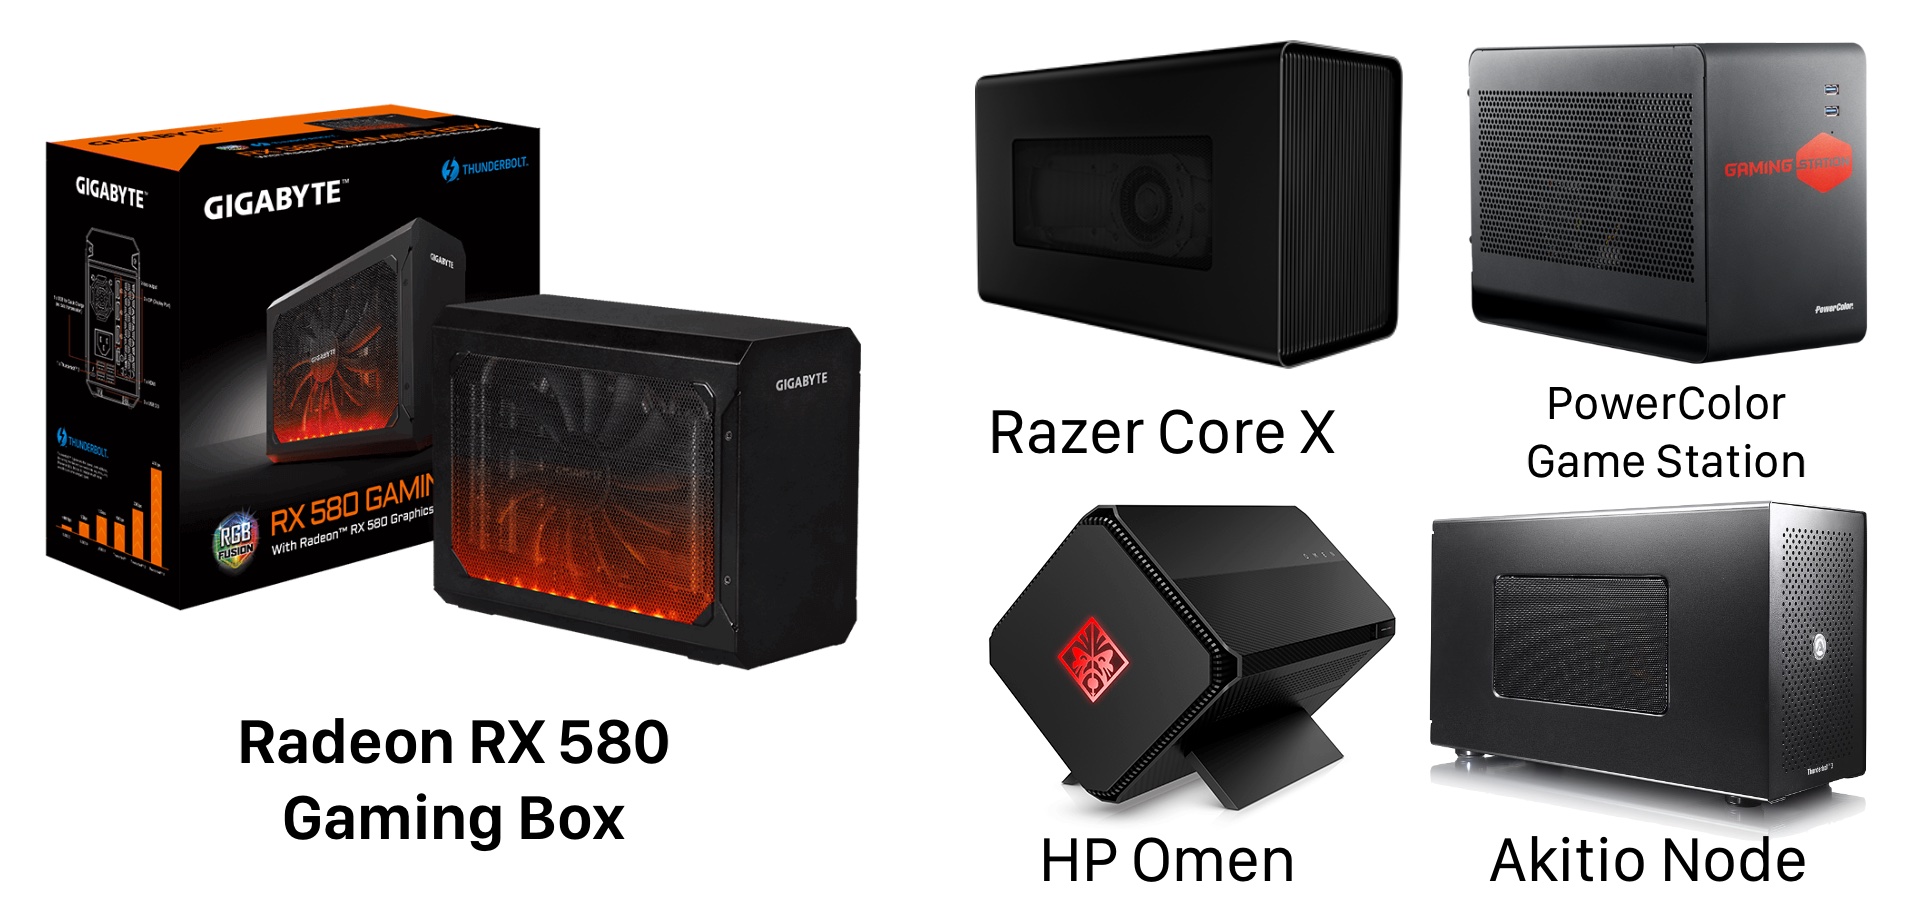 Razer Core X